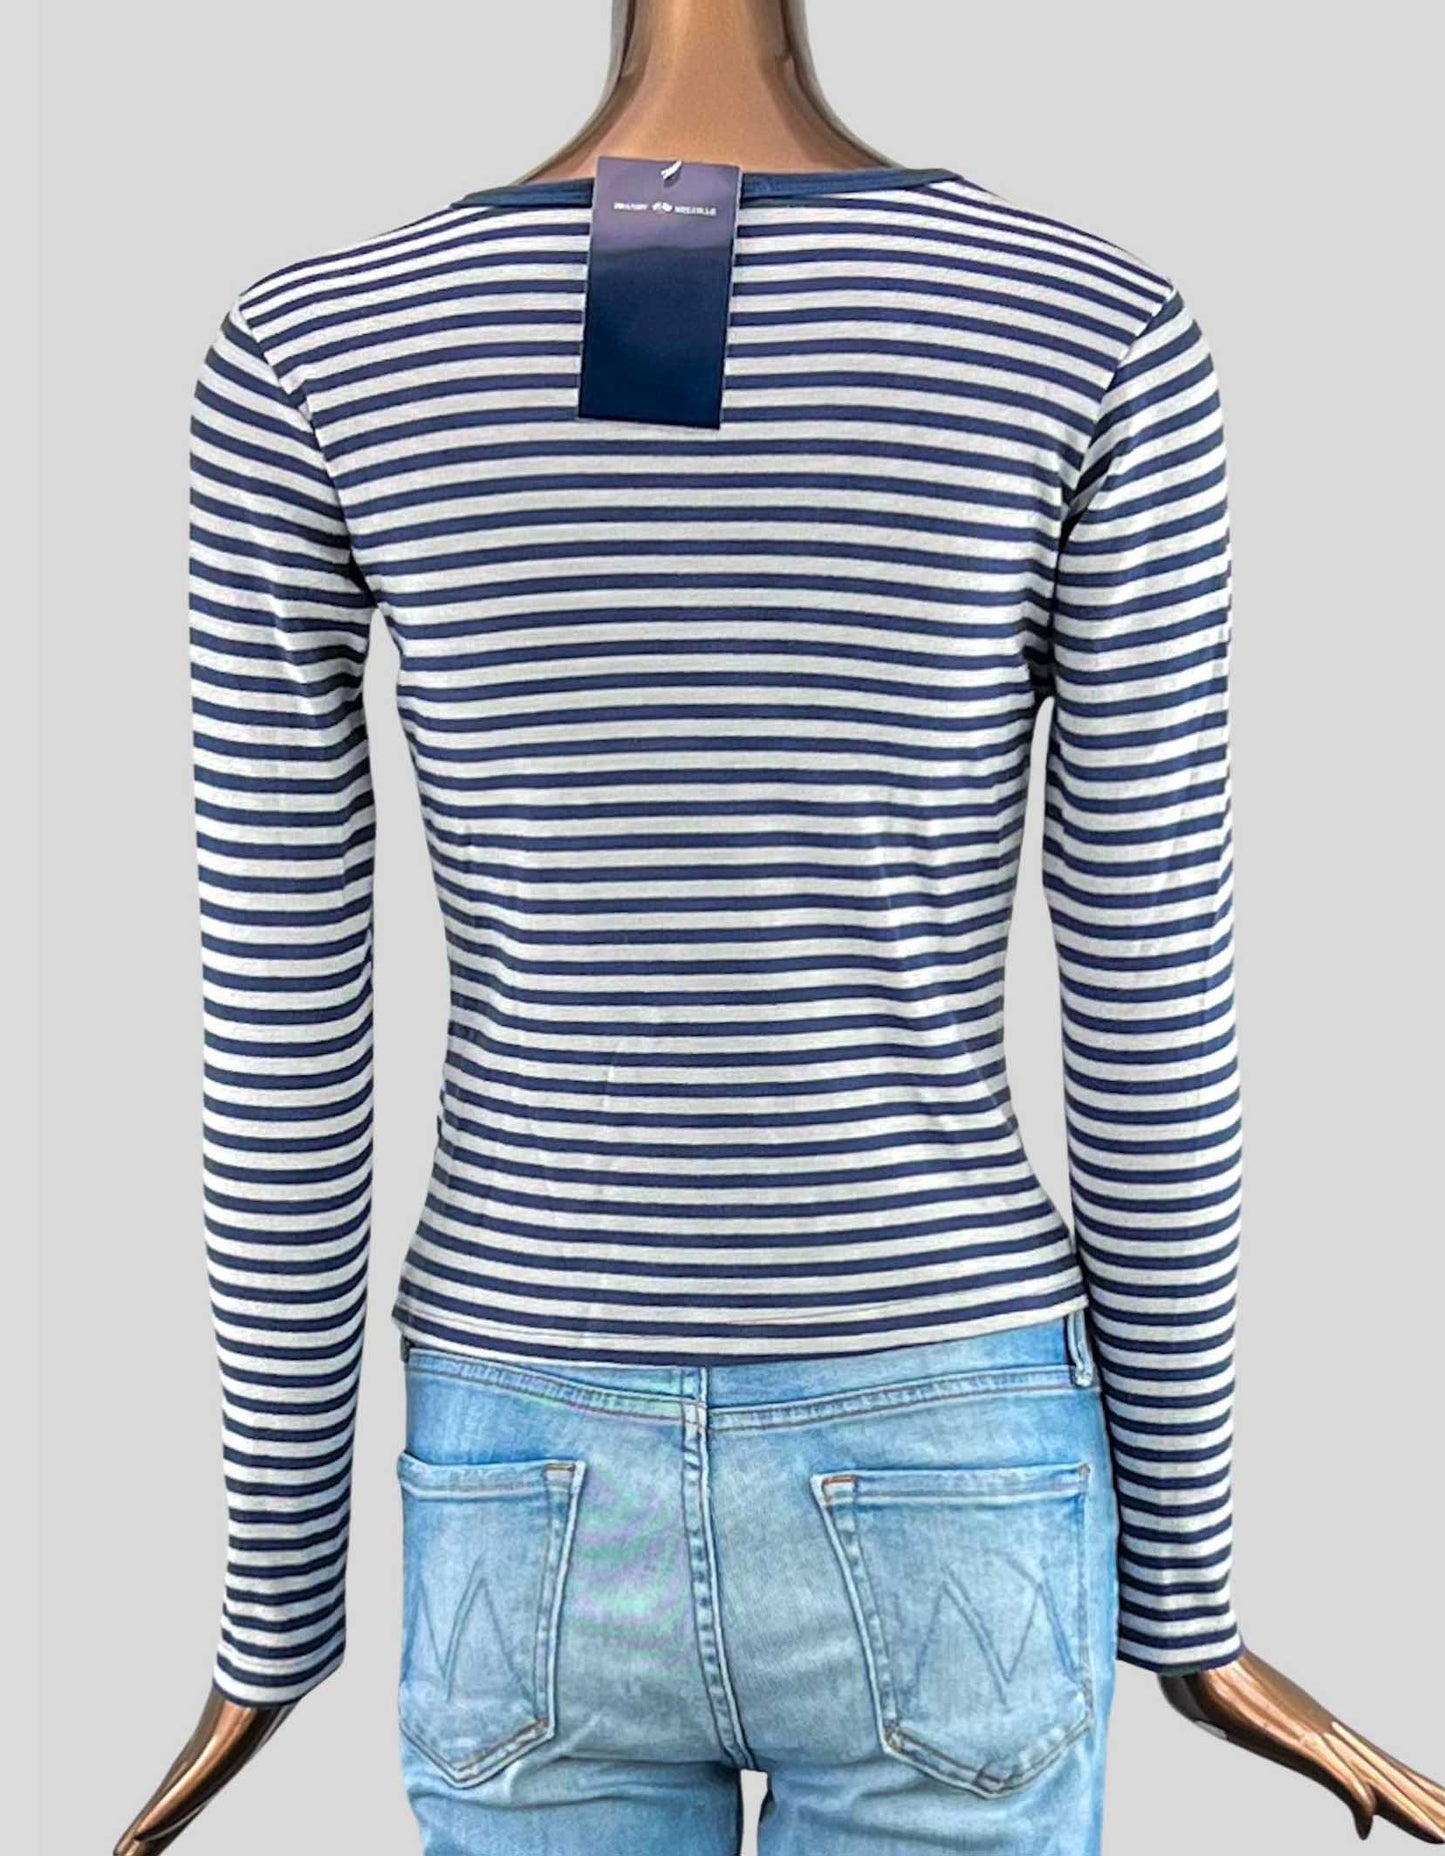 Brandy Melville Striped Shirt - One Size